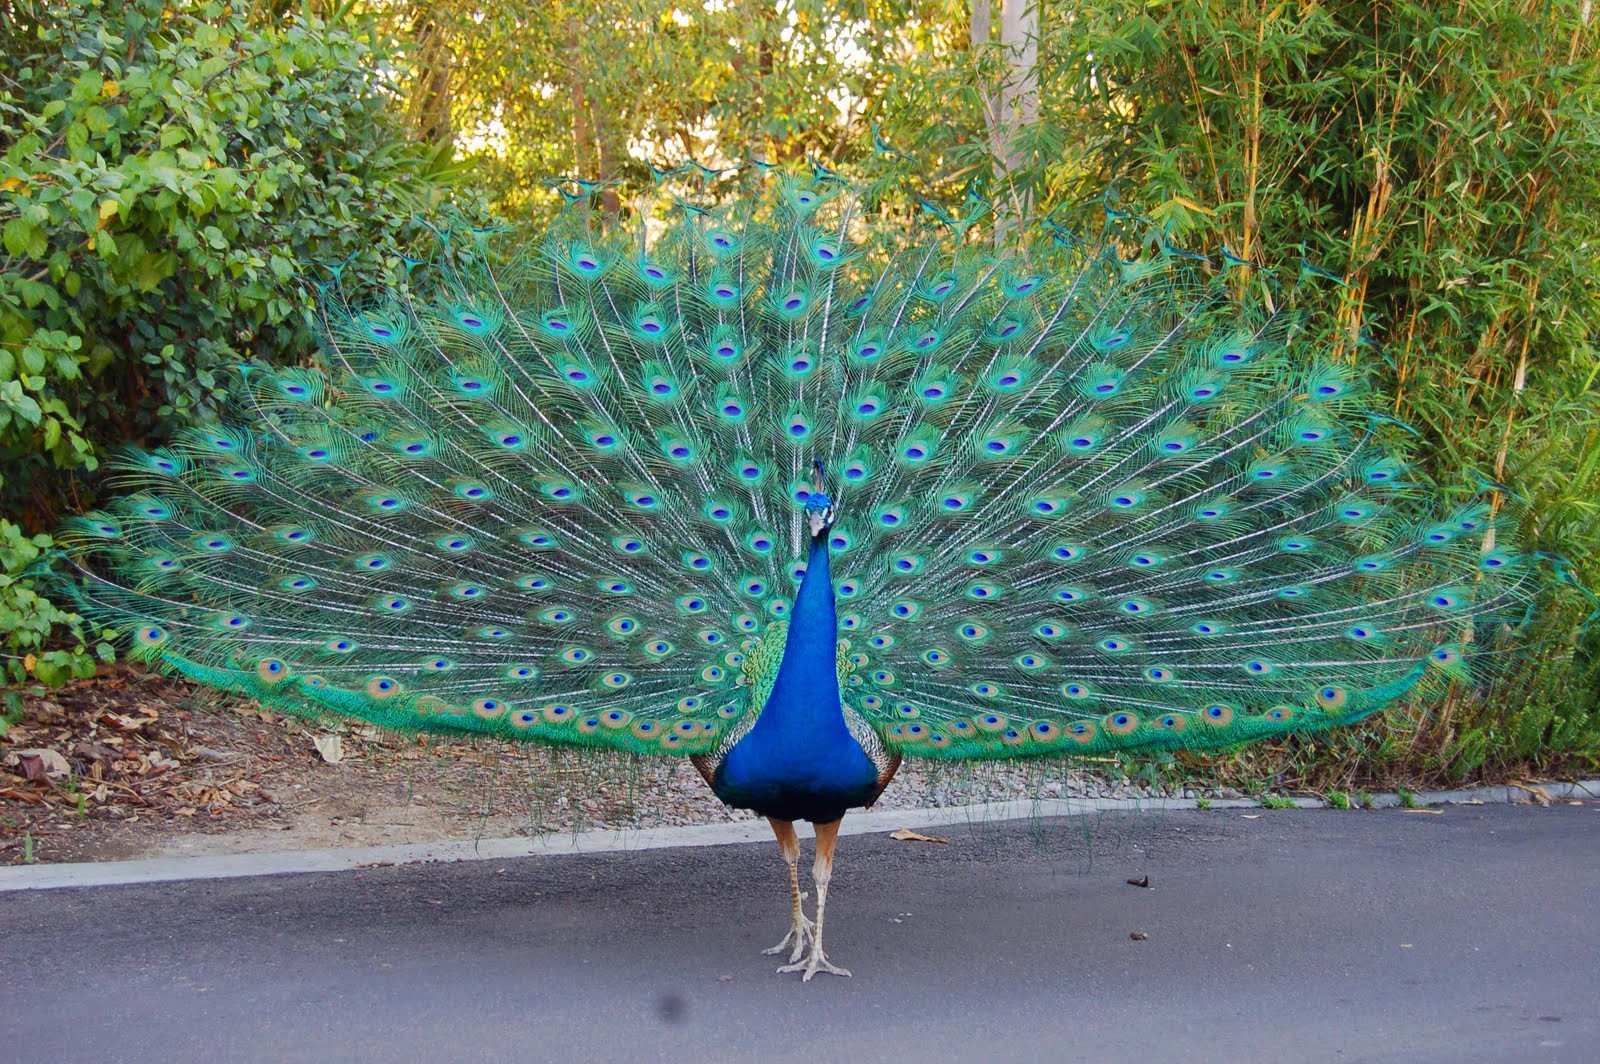 Peacock #8